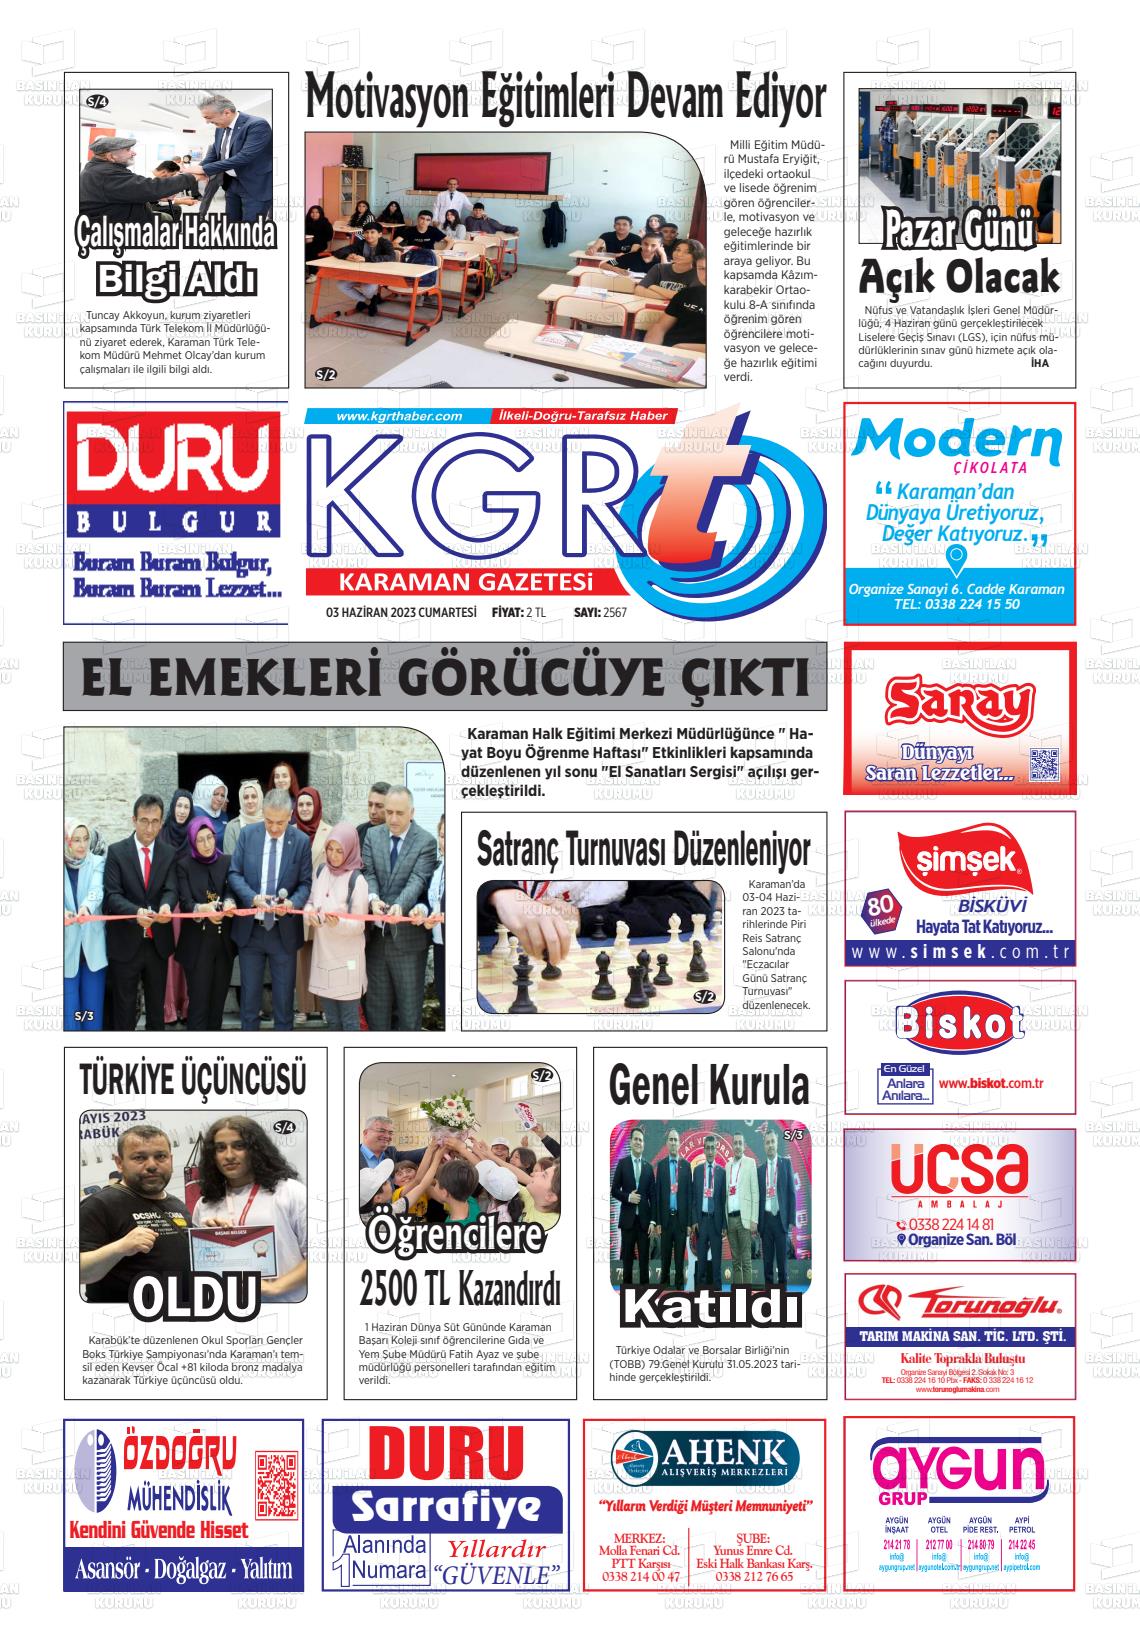 03 Haziran 2023 Kgrt Karaman Gazete Manşeti